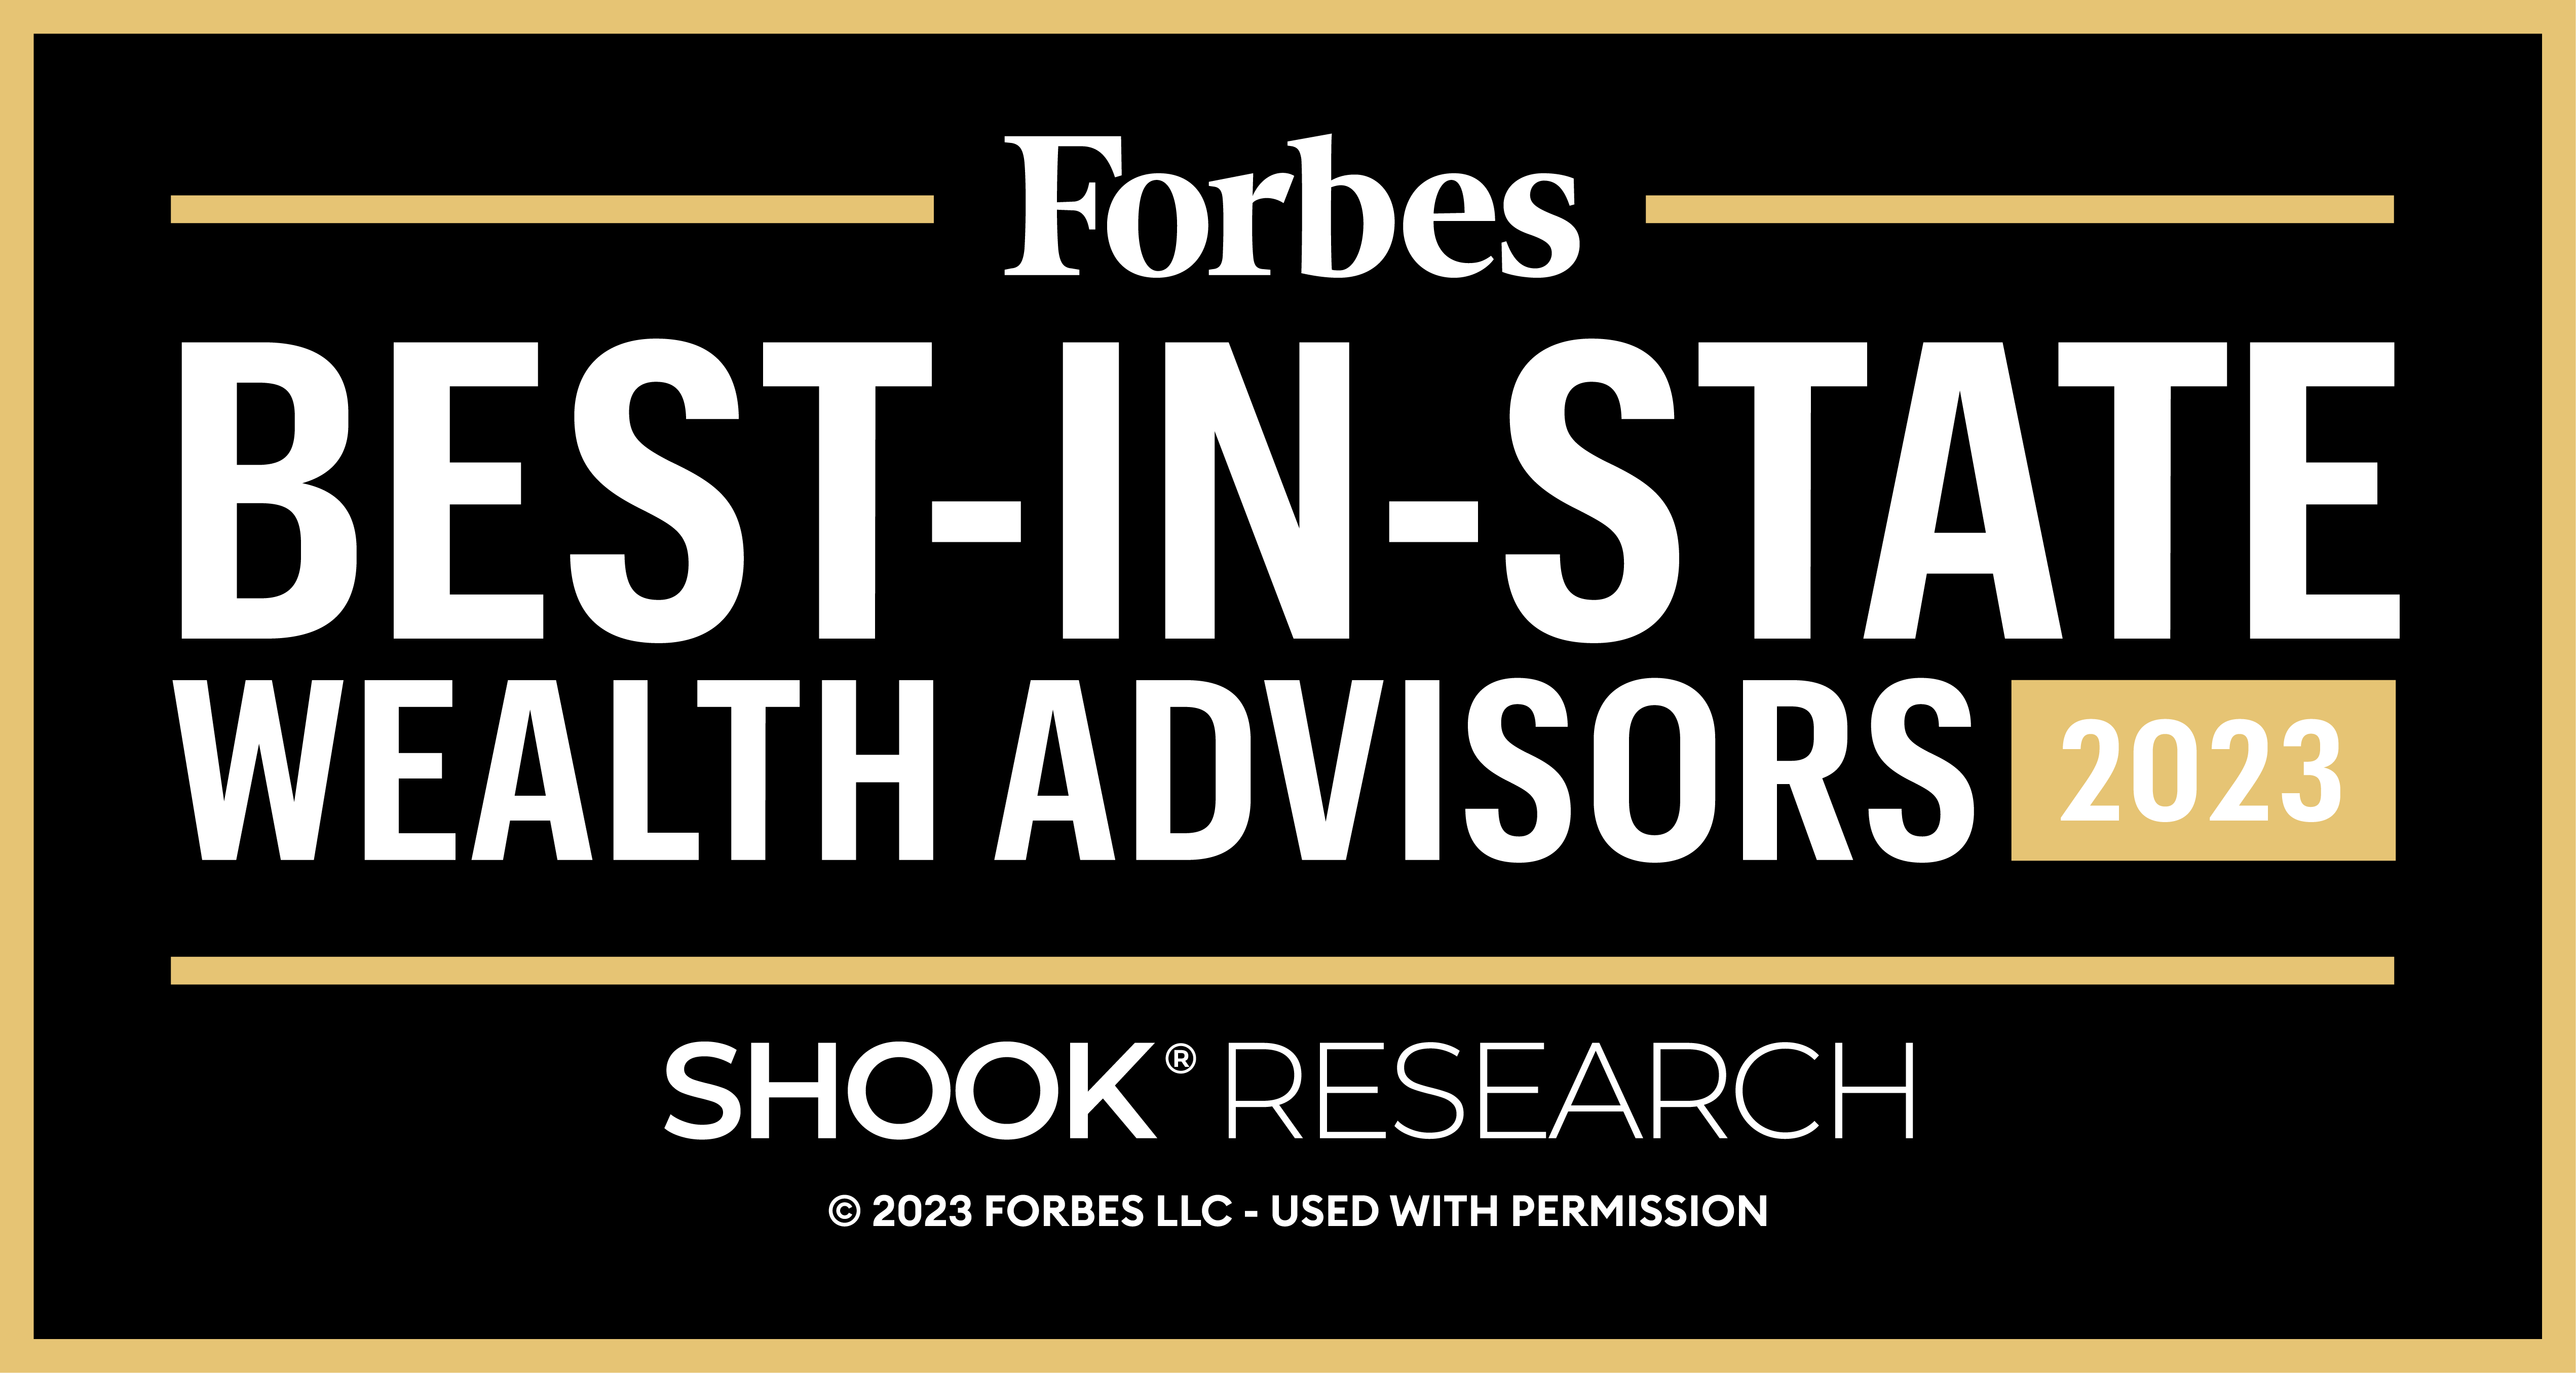 Lori Van Dusen recognized as 1 on Forbes BestInState Wealth Advisors